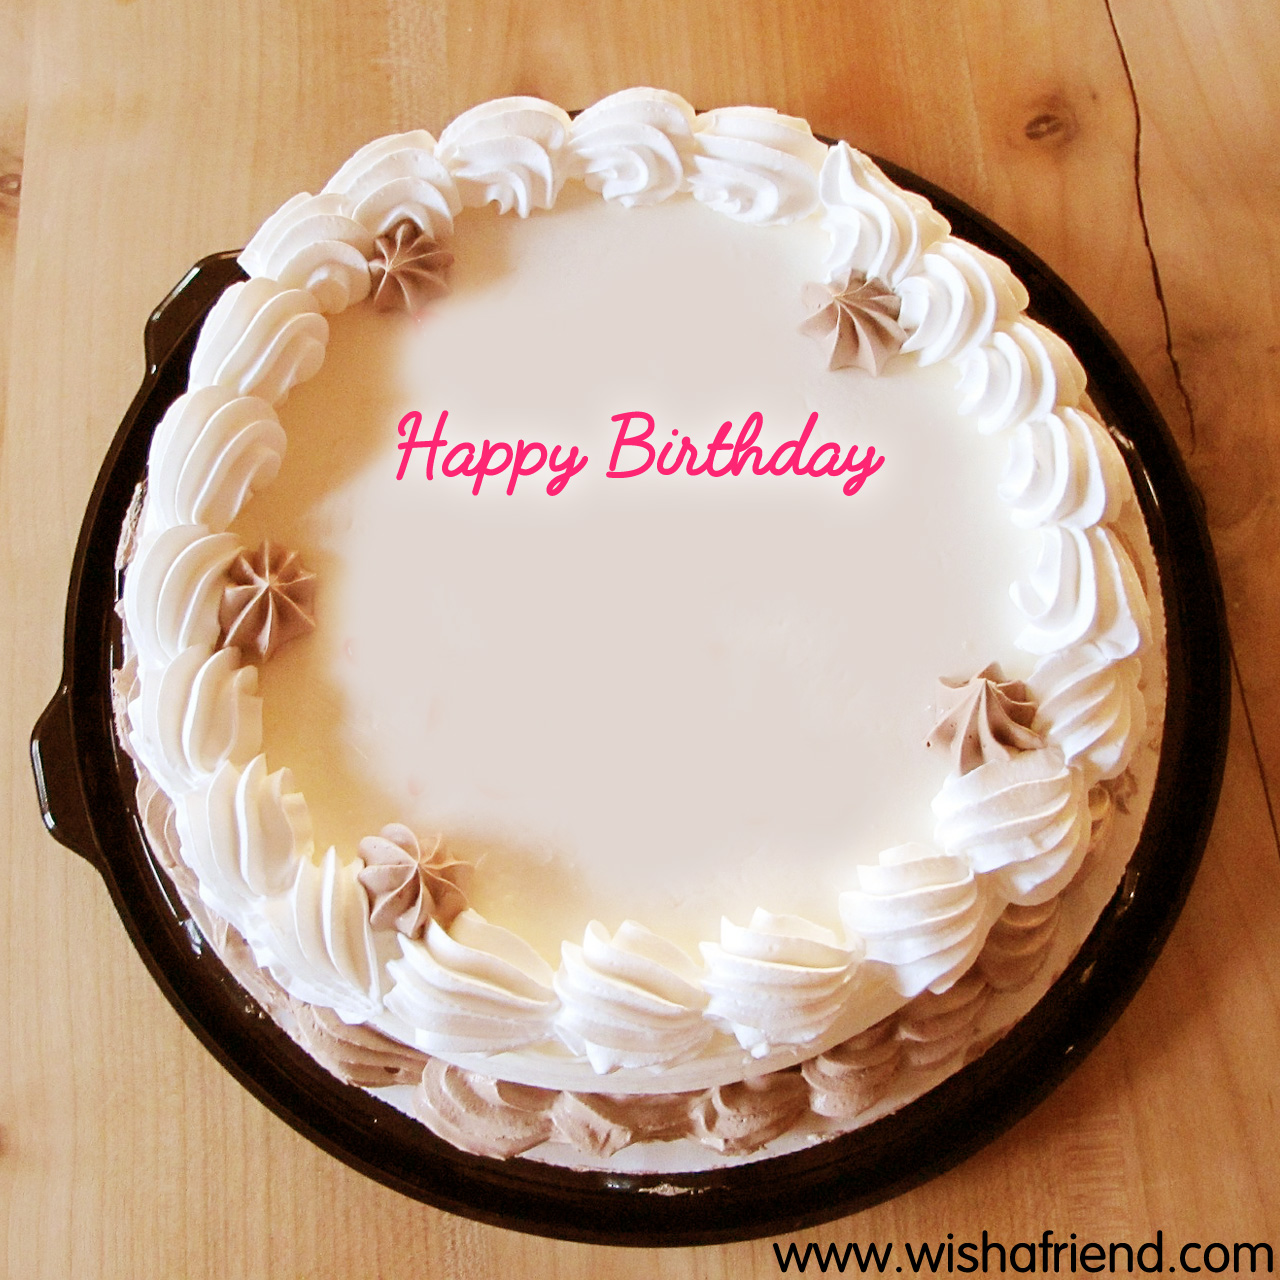 Happy Birthday Message Cake #2